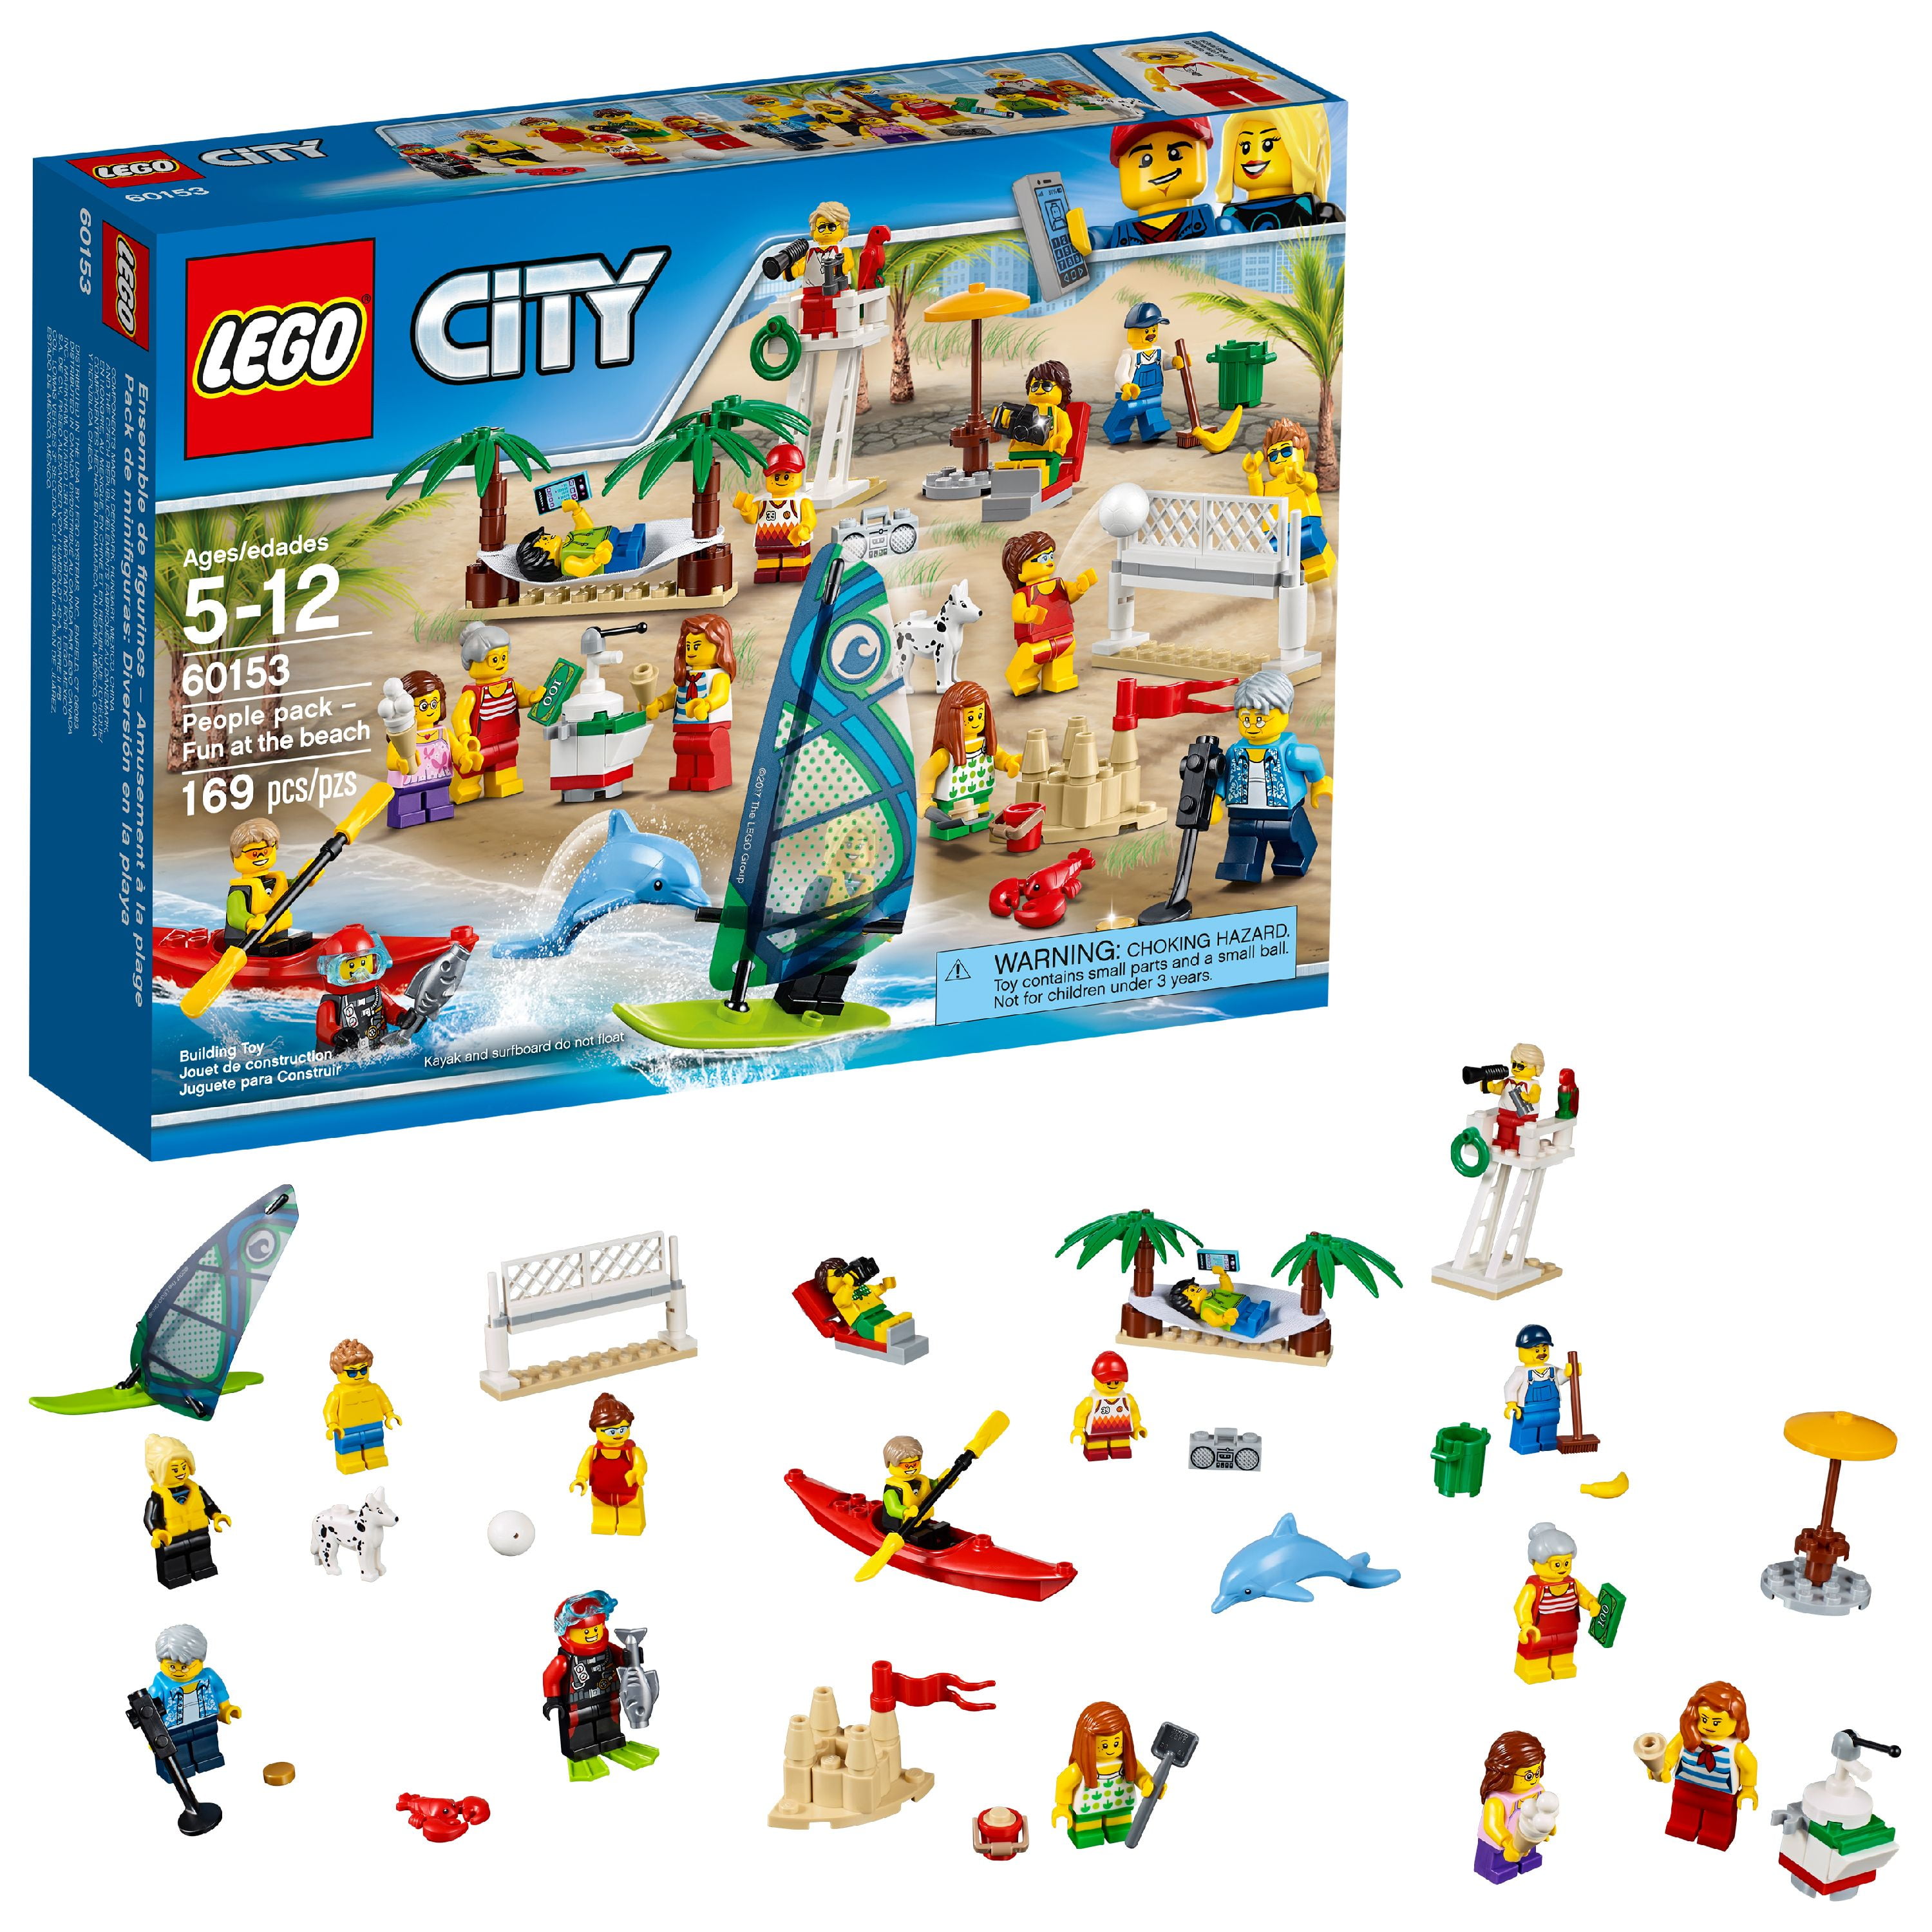 Beachgoer senior CTY762 60153 Lego